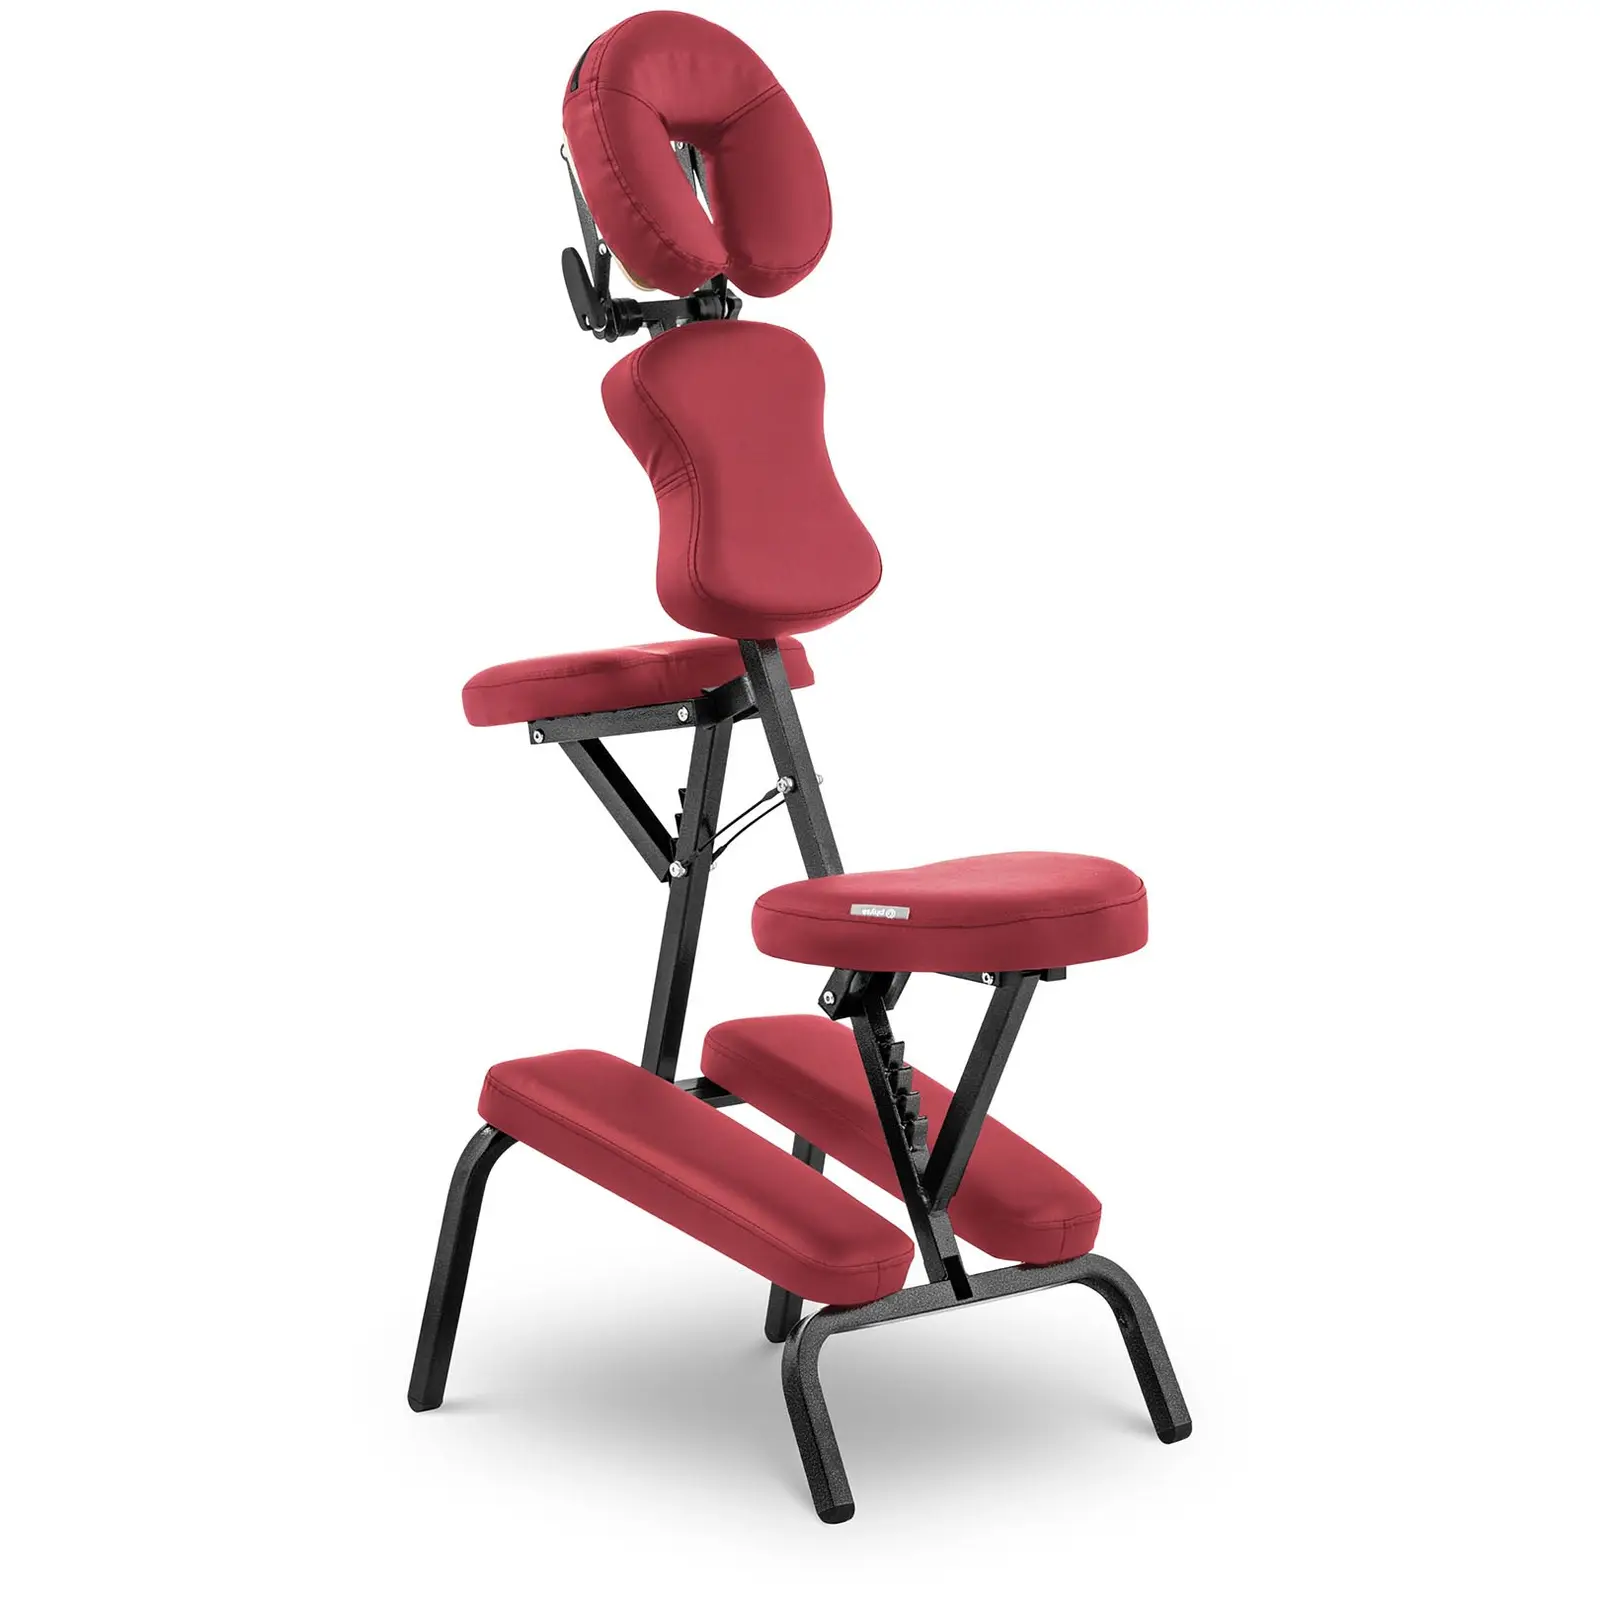 Massagestuhl klappbar - 130 kg - Rot